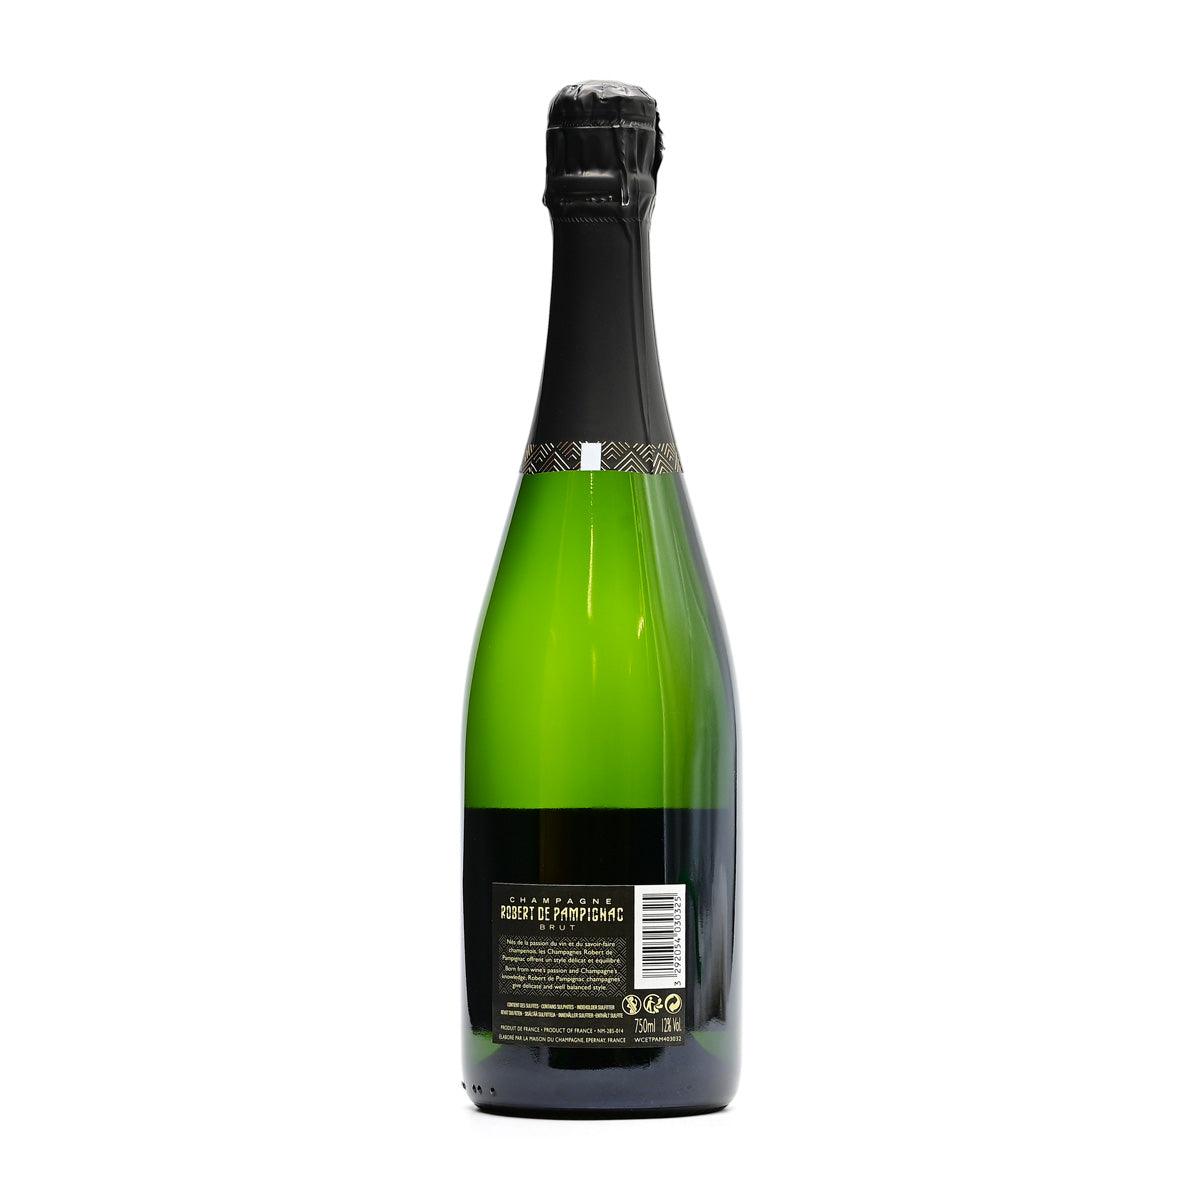 Robert de Pampignac Brut Champagne NV - Champagne - GDV Fine Wines® - 750ml, Champagne, Champagne Robert de Pampignac, France, Non-Vintage, Wine Product